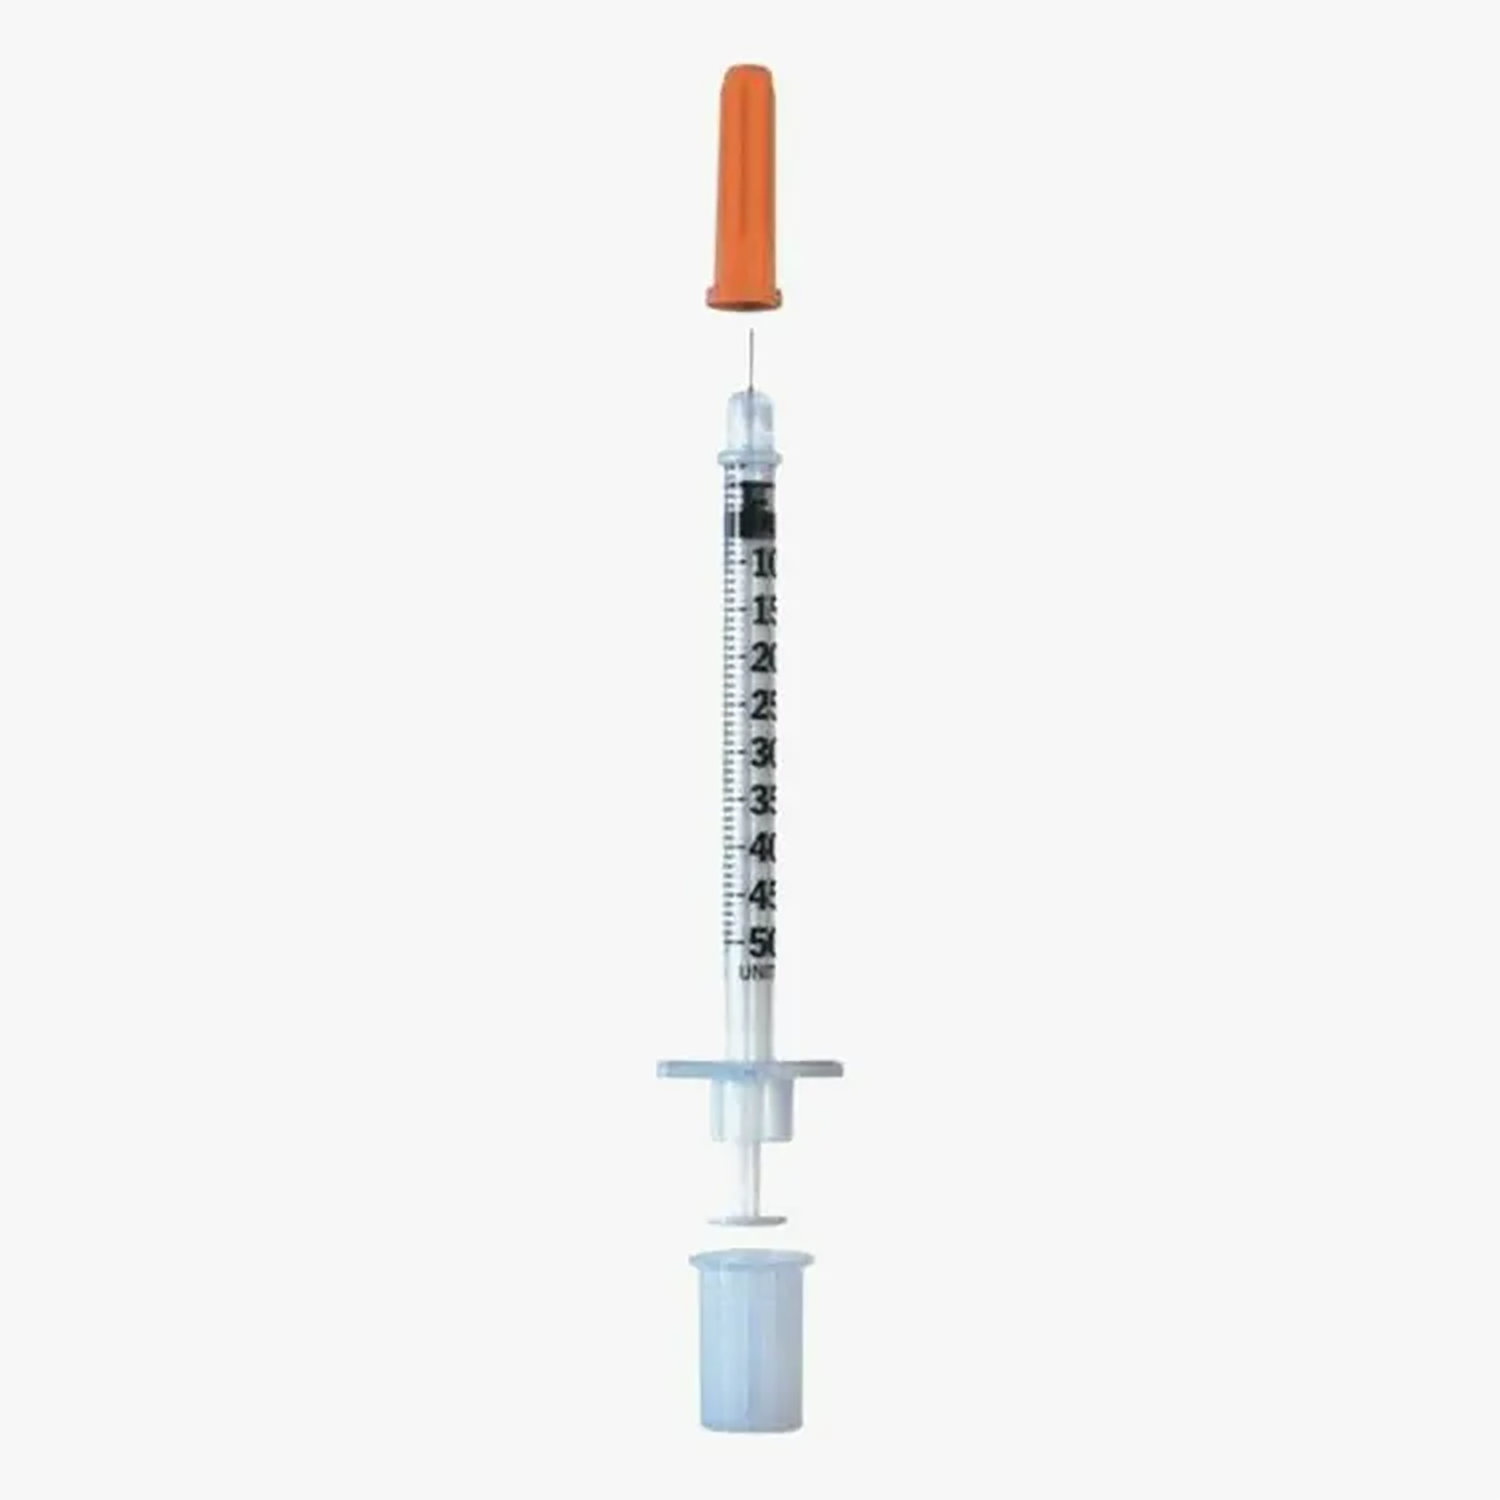 BD Microfine Insulin Syringe | 1ml | Pack of 200